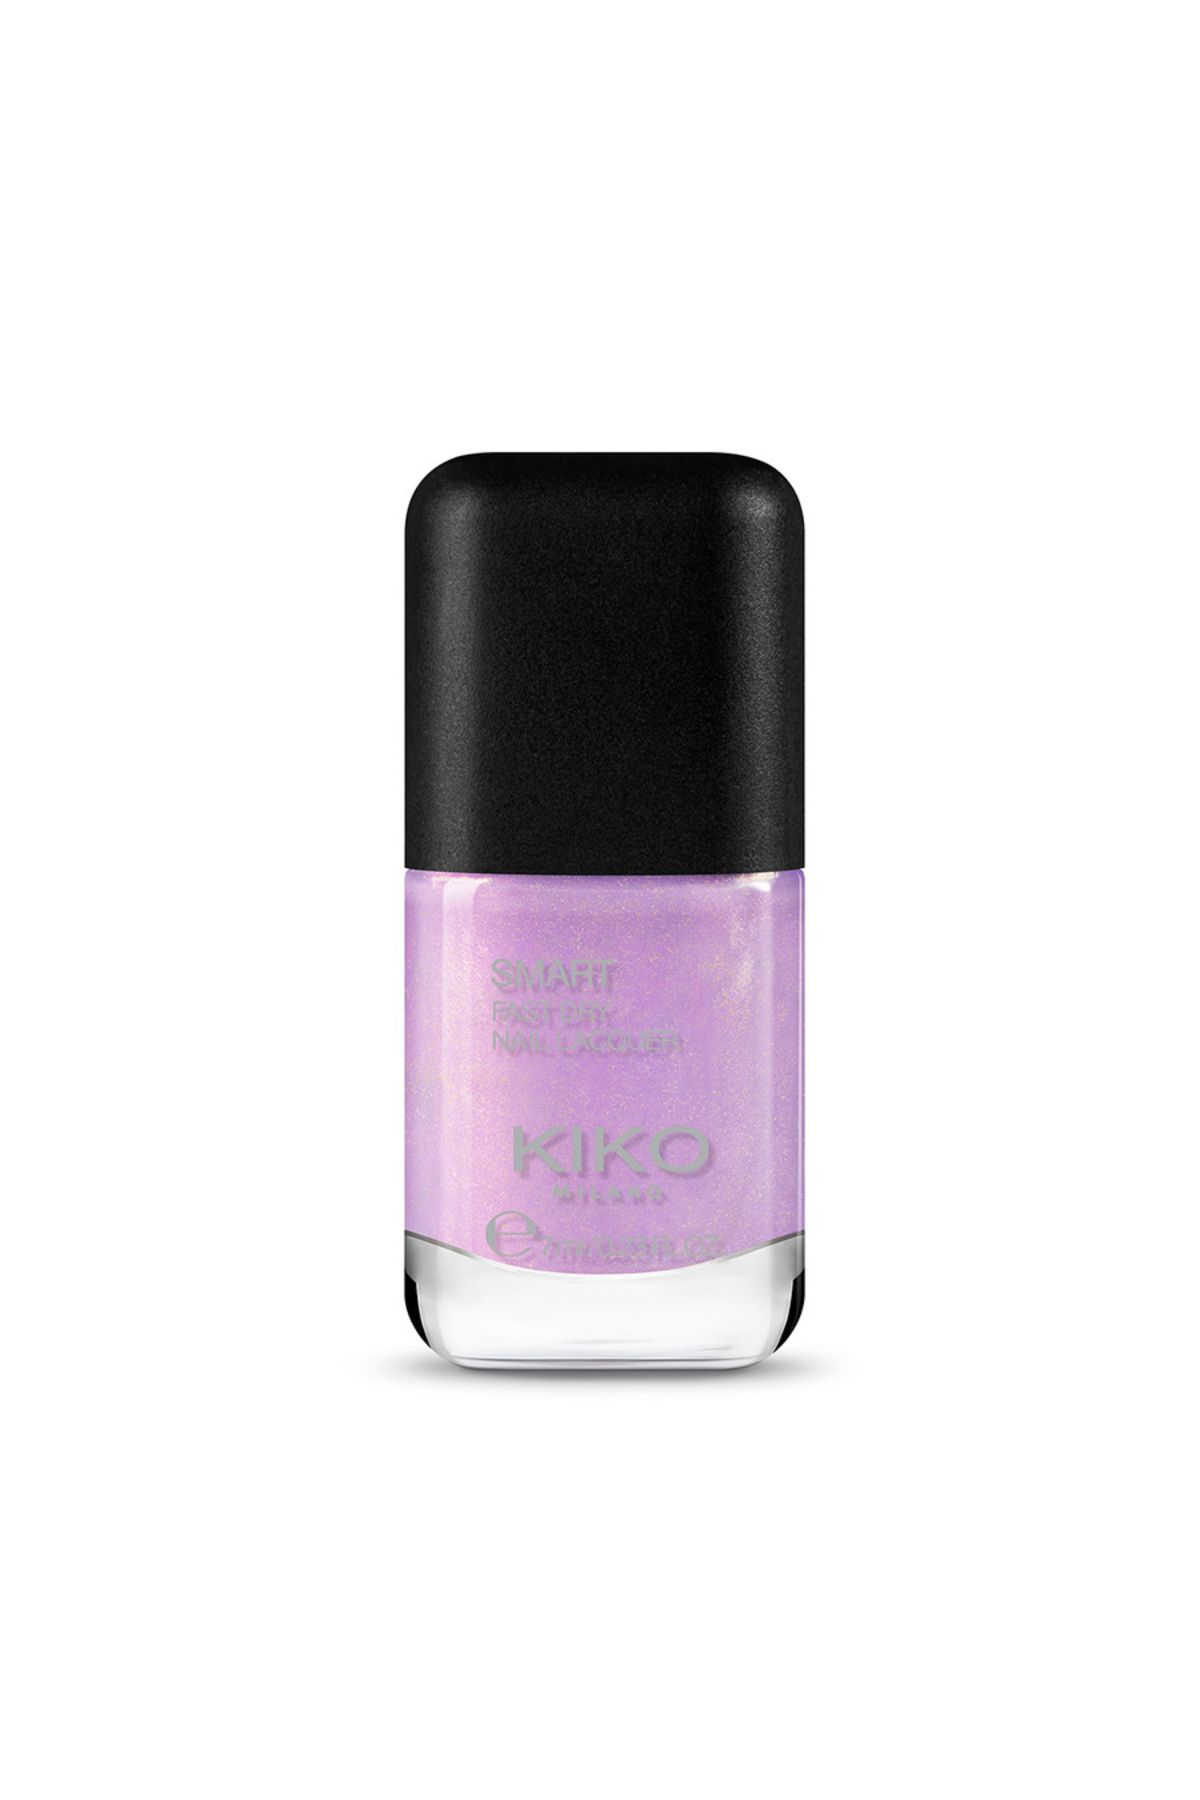 KIKO Oje - Smart Nail Lacquer 23 Pearly Golden Lilac